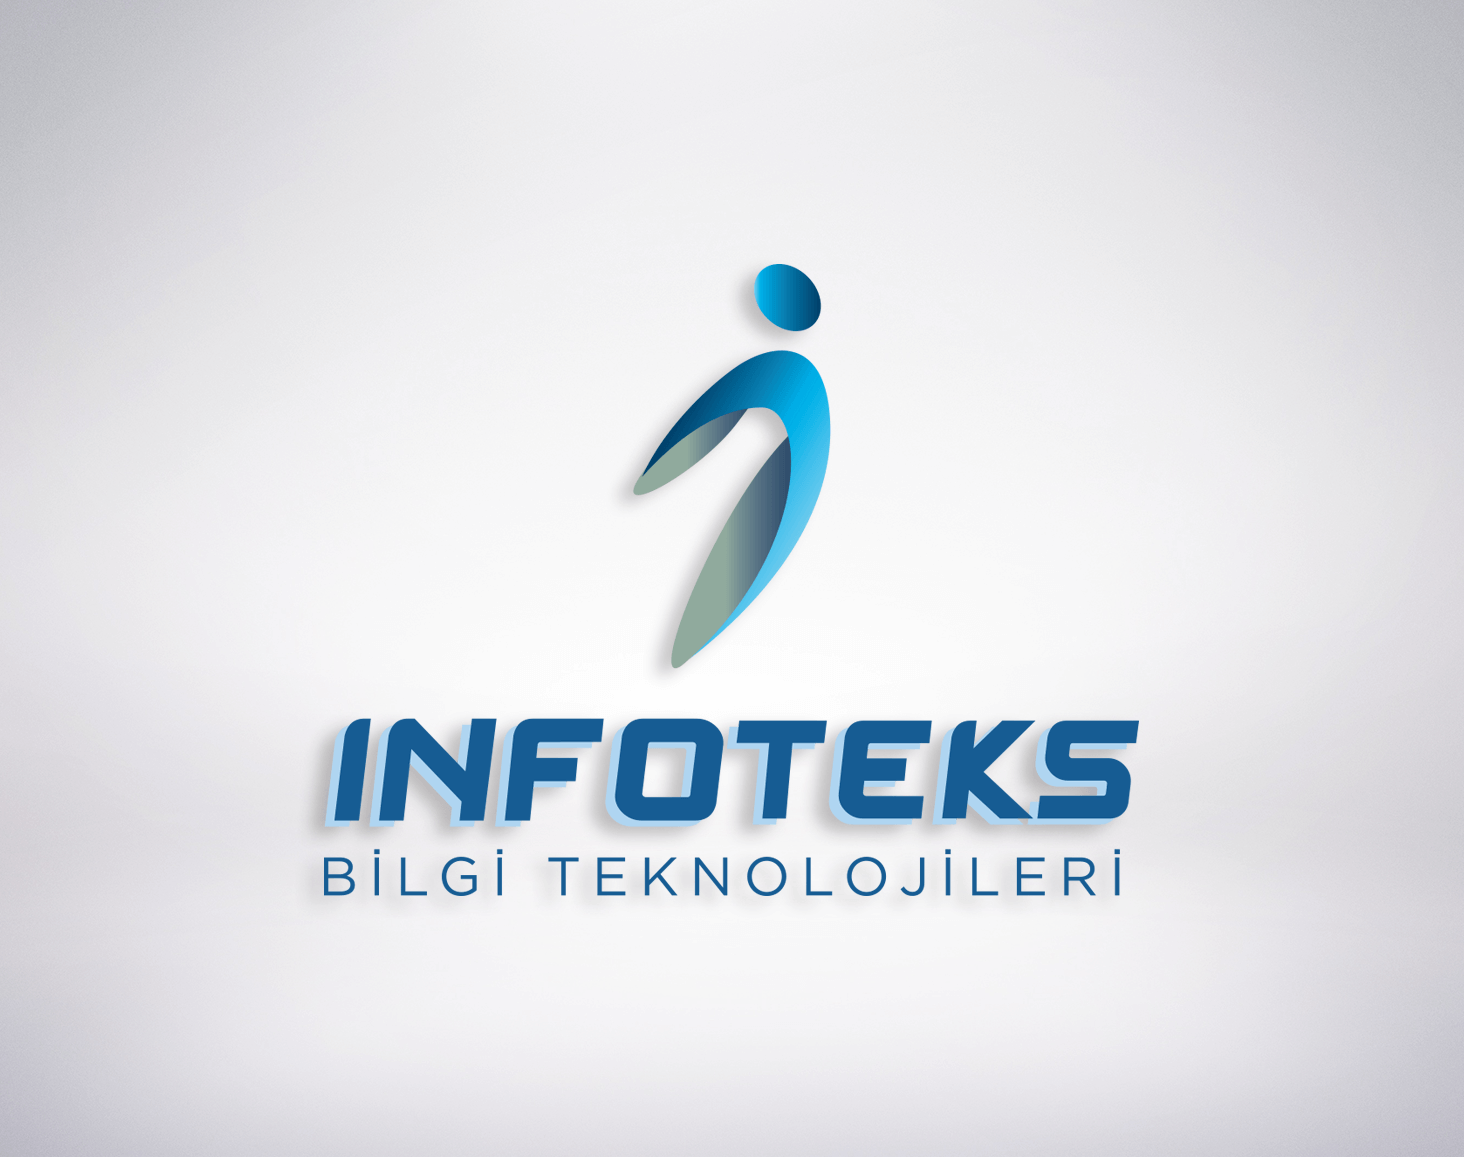 Infoteks Information Technologies